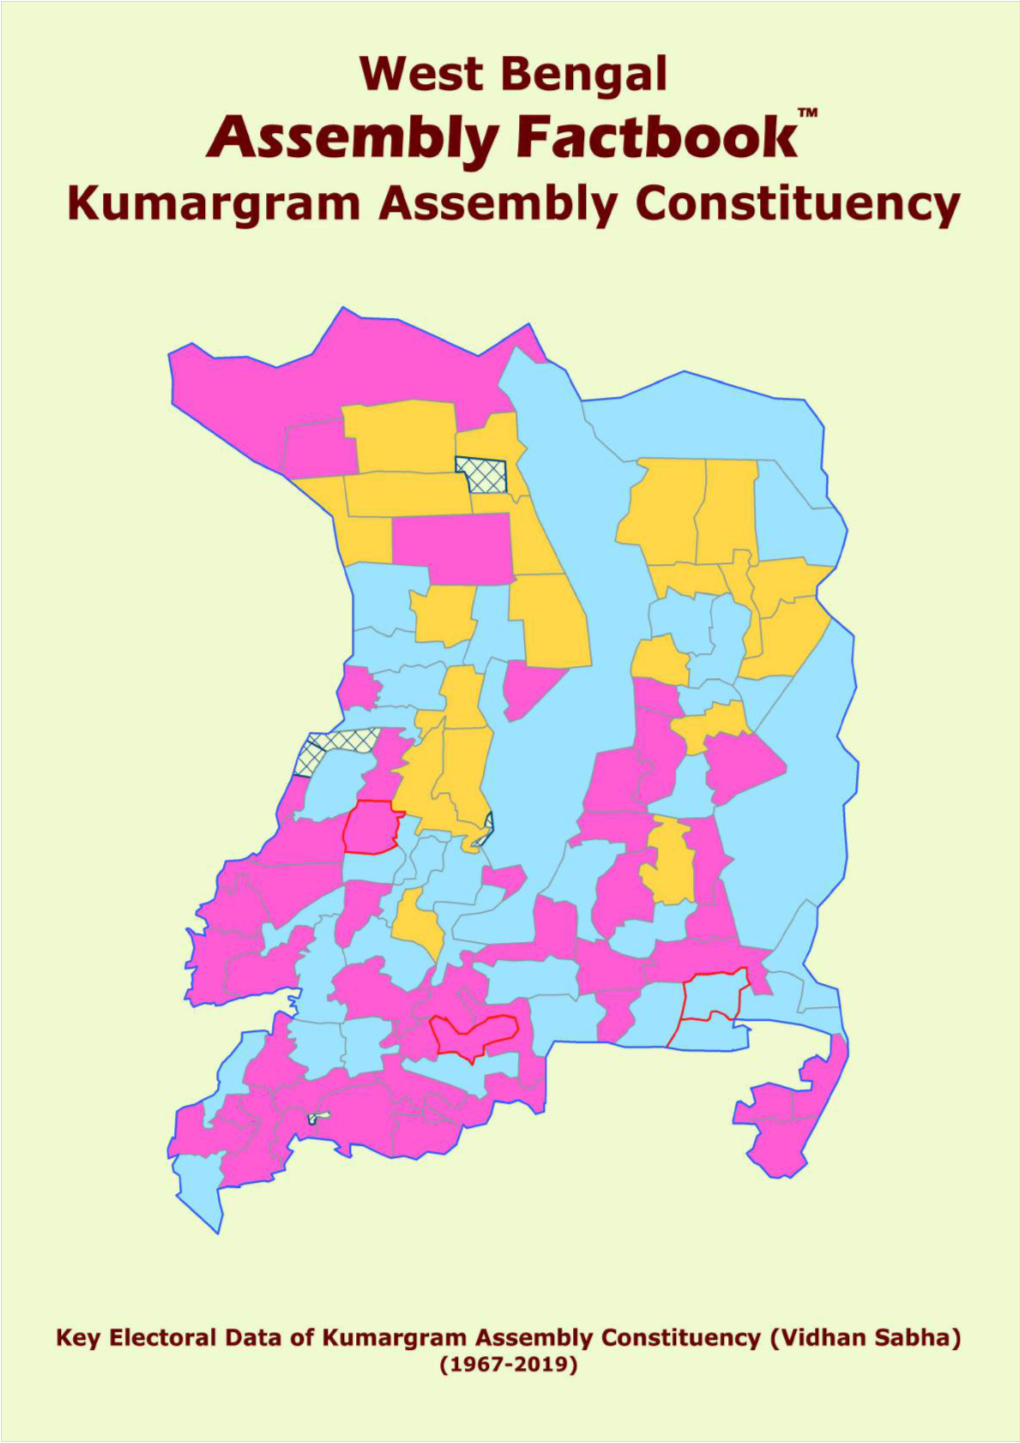 Kumargram Assembly West Bengal Factbook